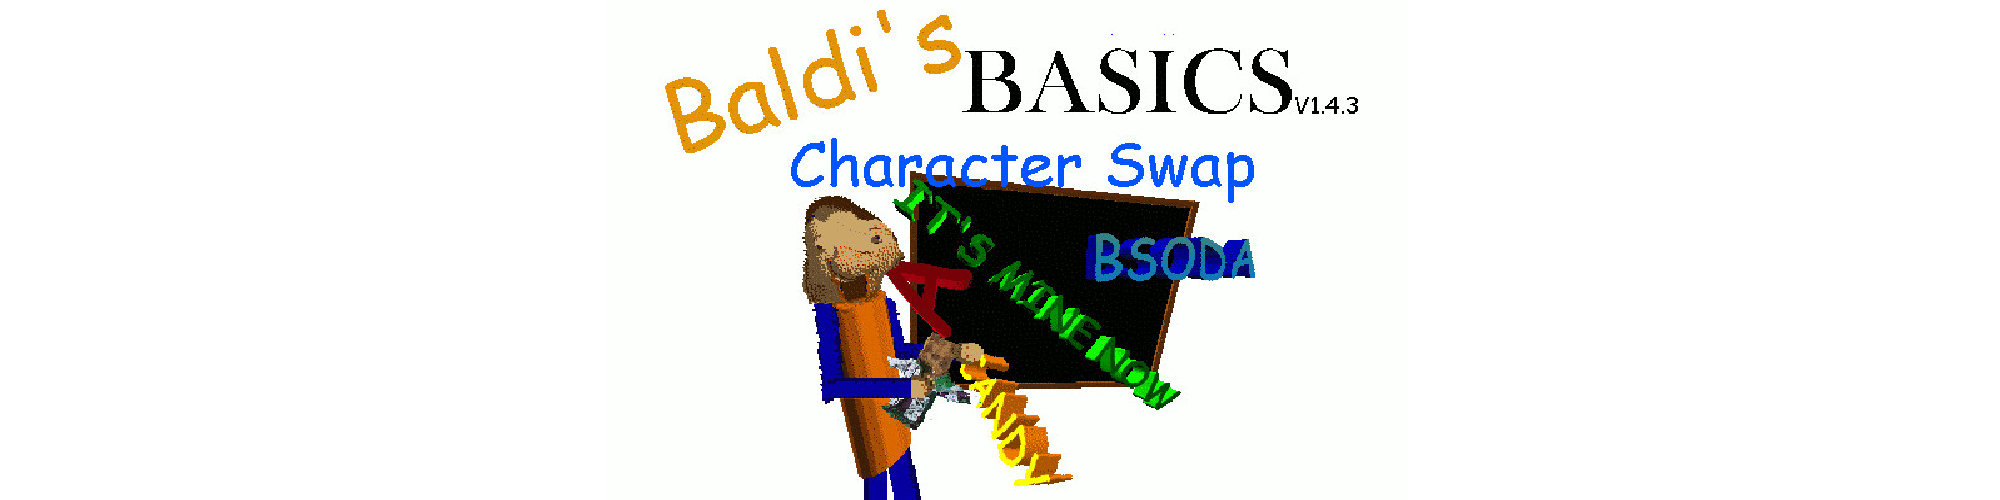 Baldi's Basics Character Swap